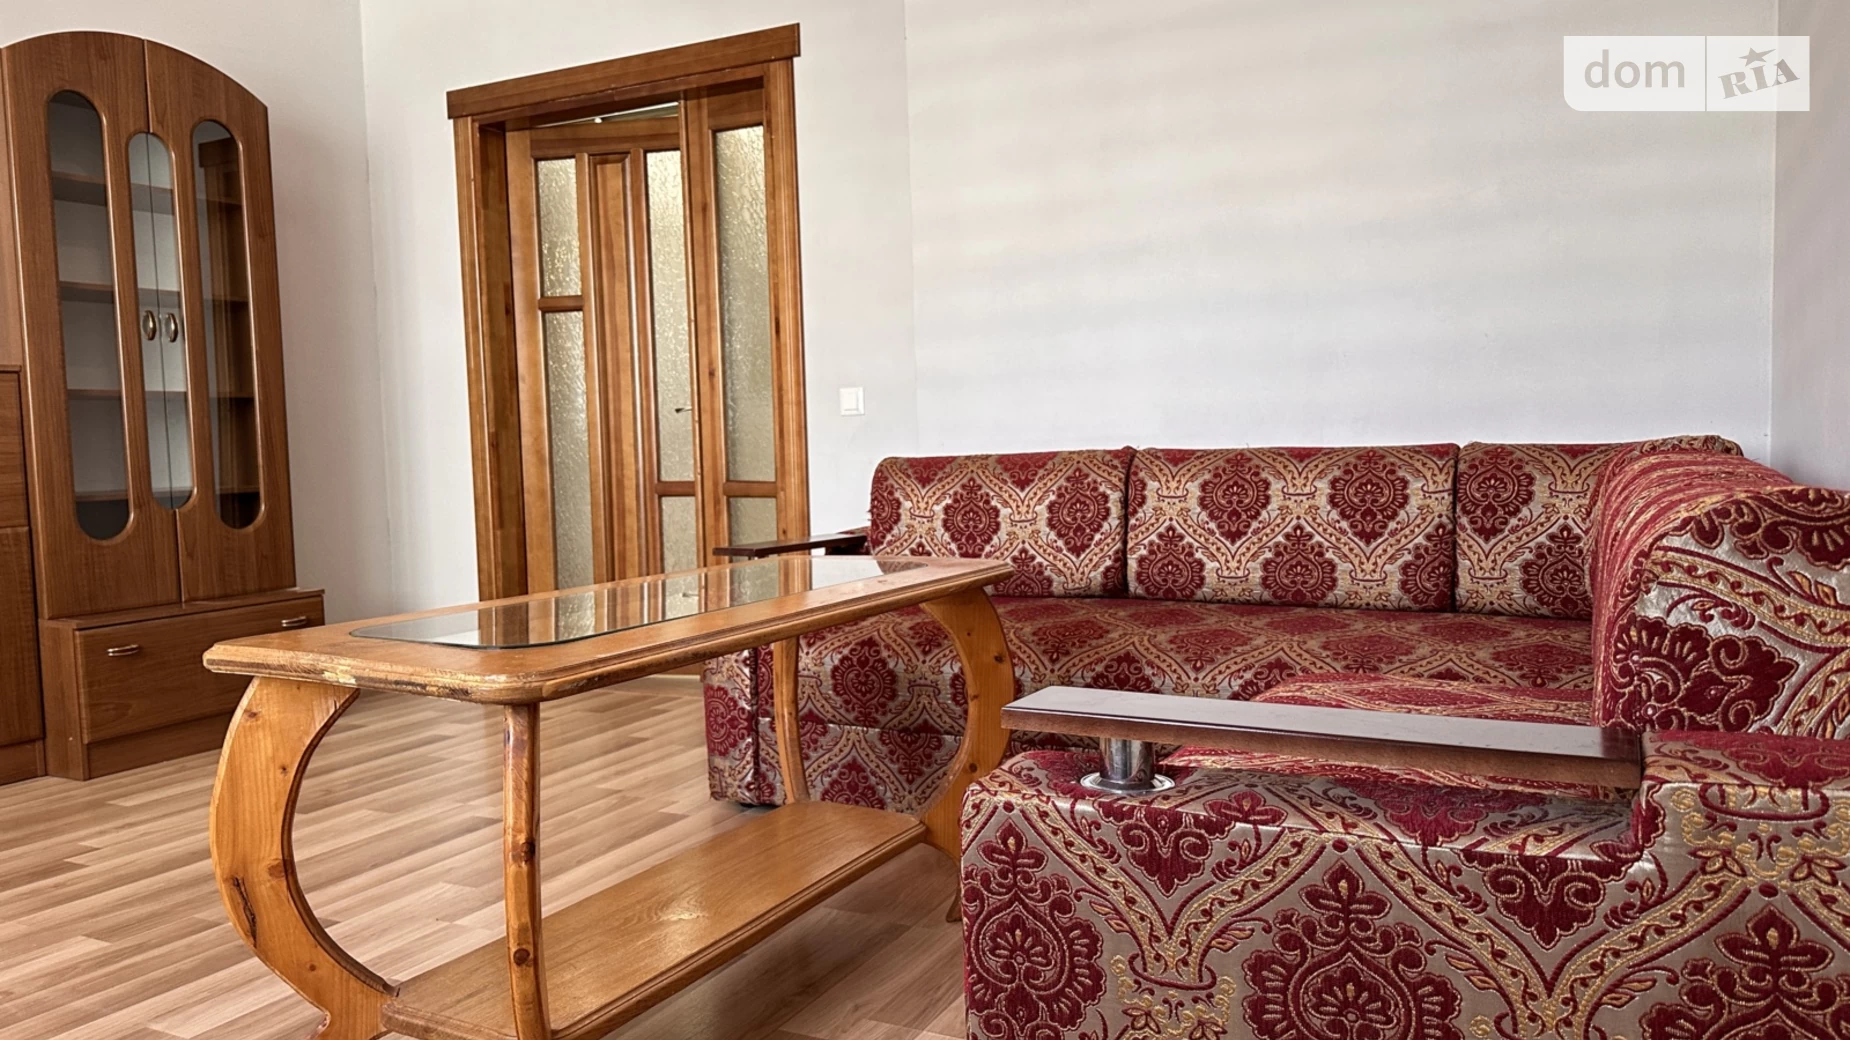 Продается 2-комнатная квартира 61.4 кв. м в Ивано-Франковске - фото 4